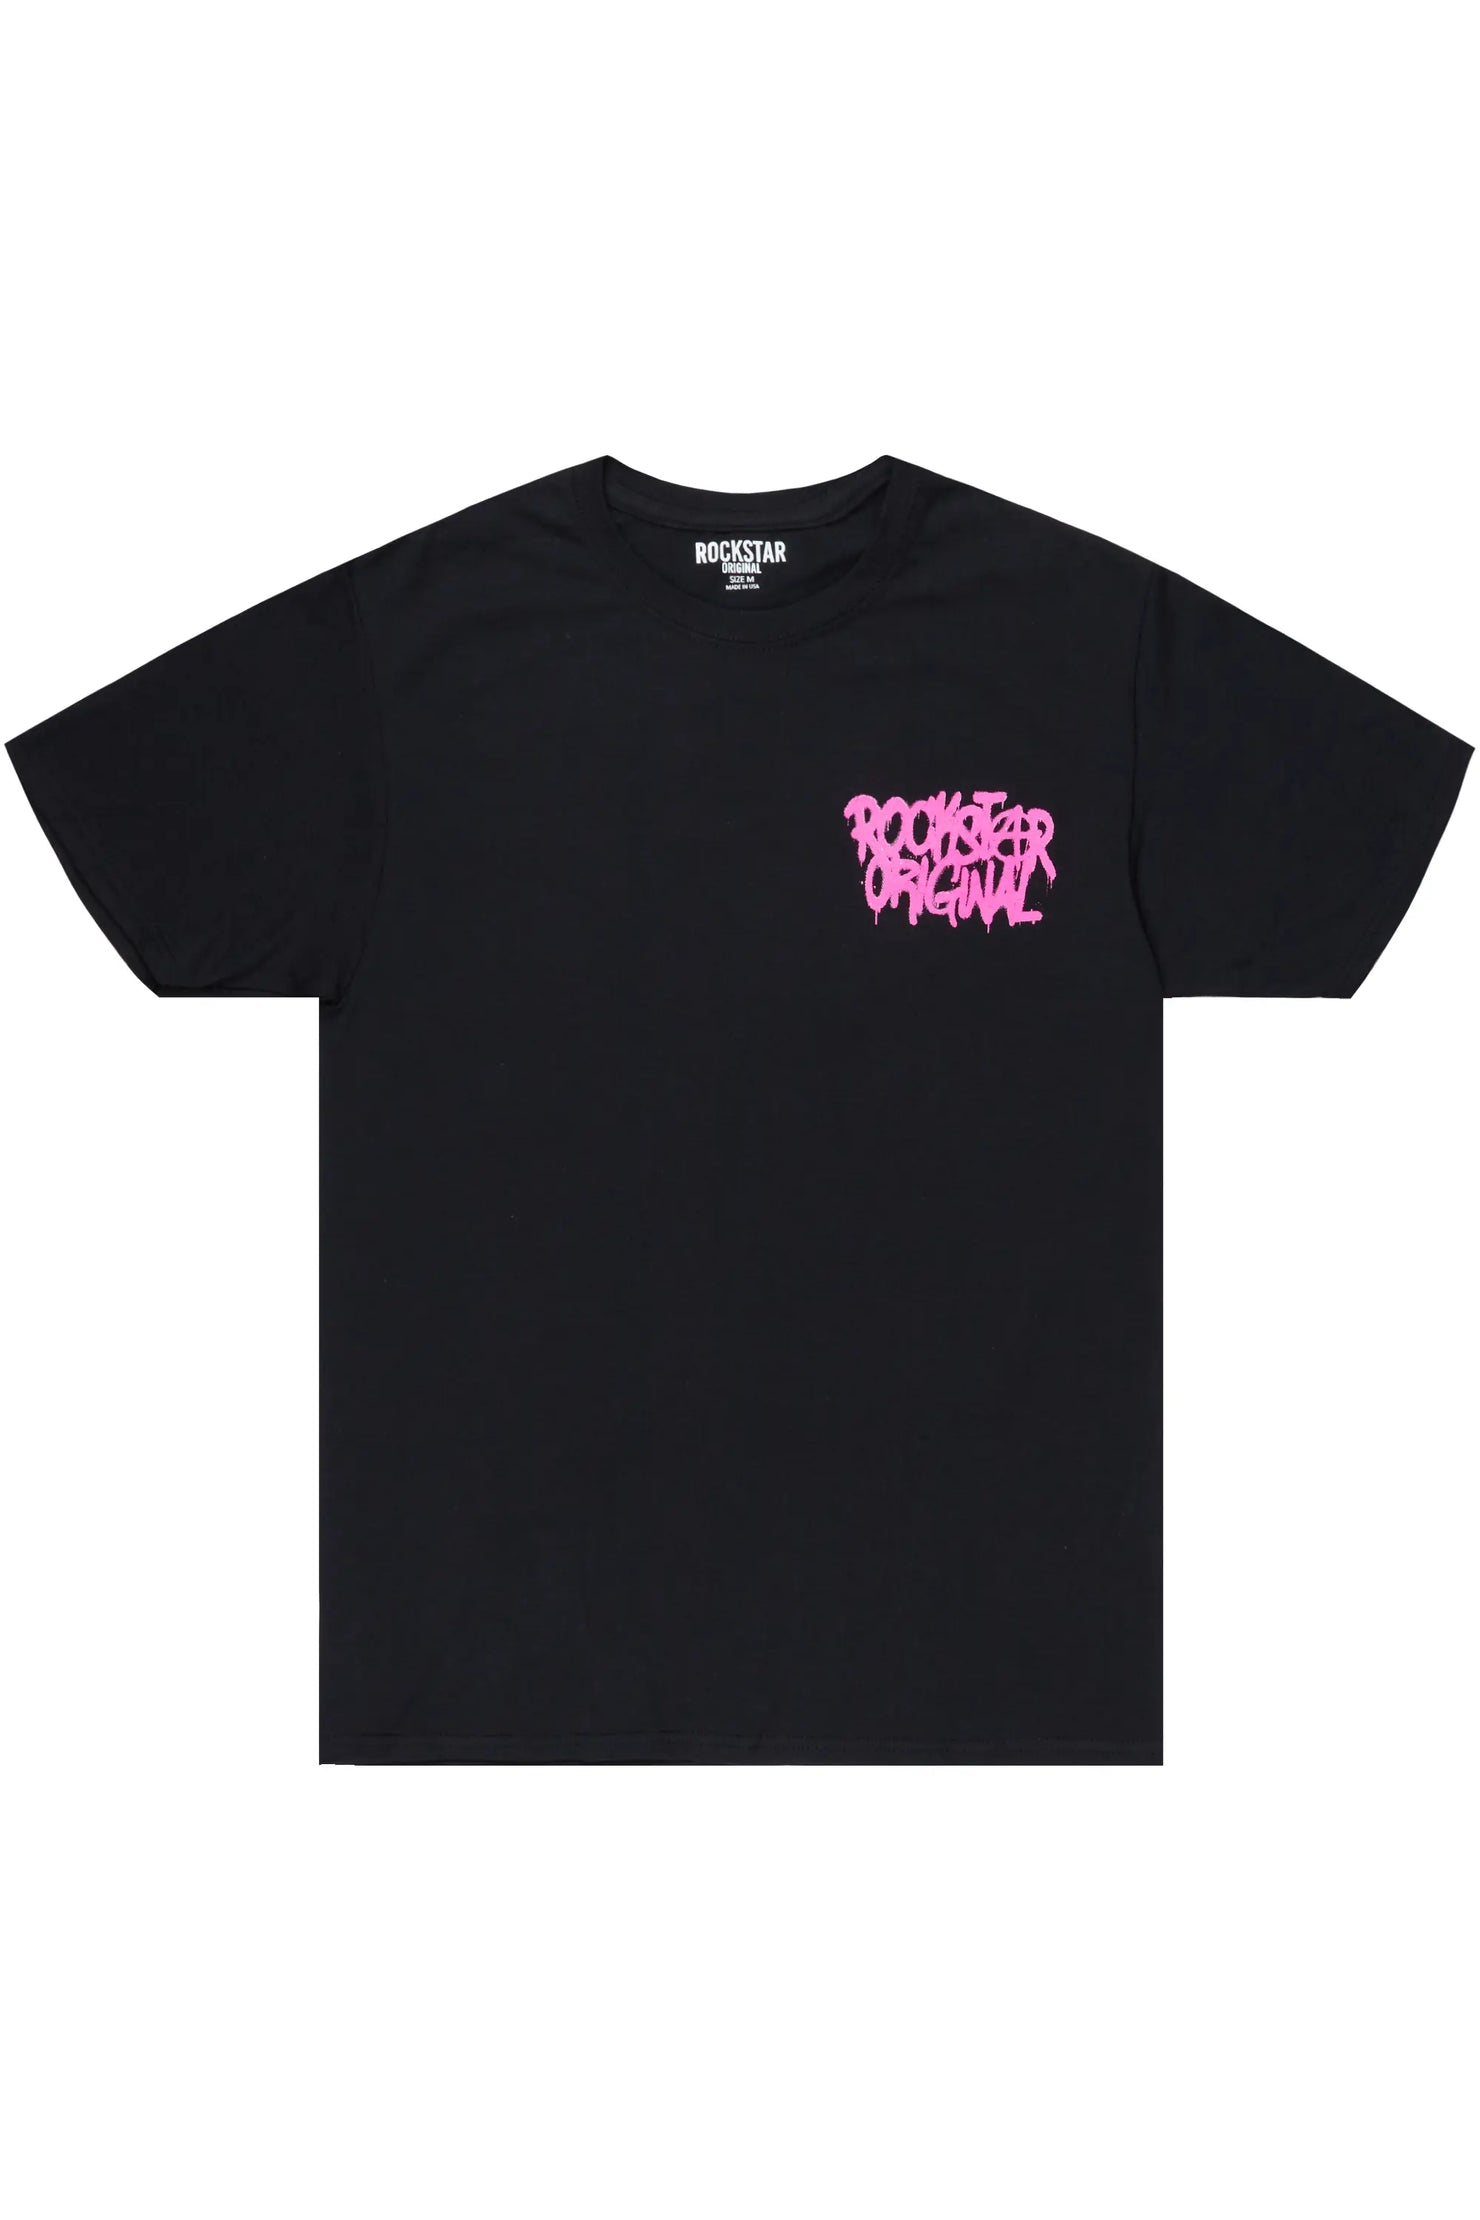 Badbich Black Graphic T-Shirt